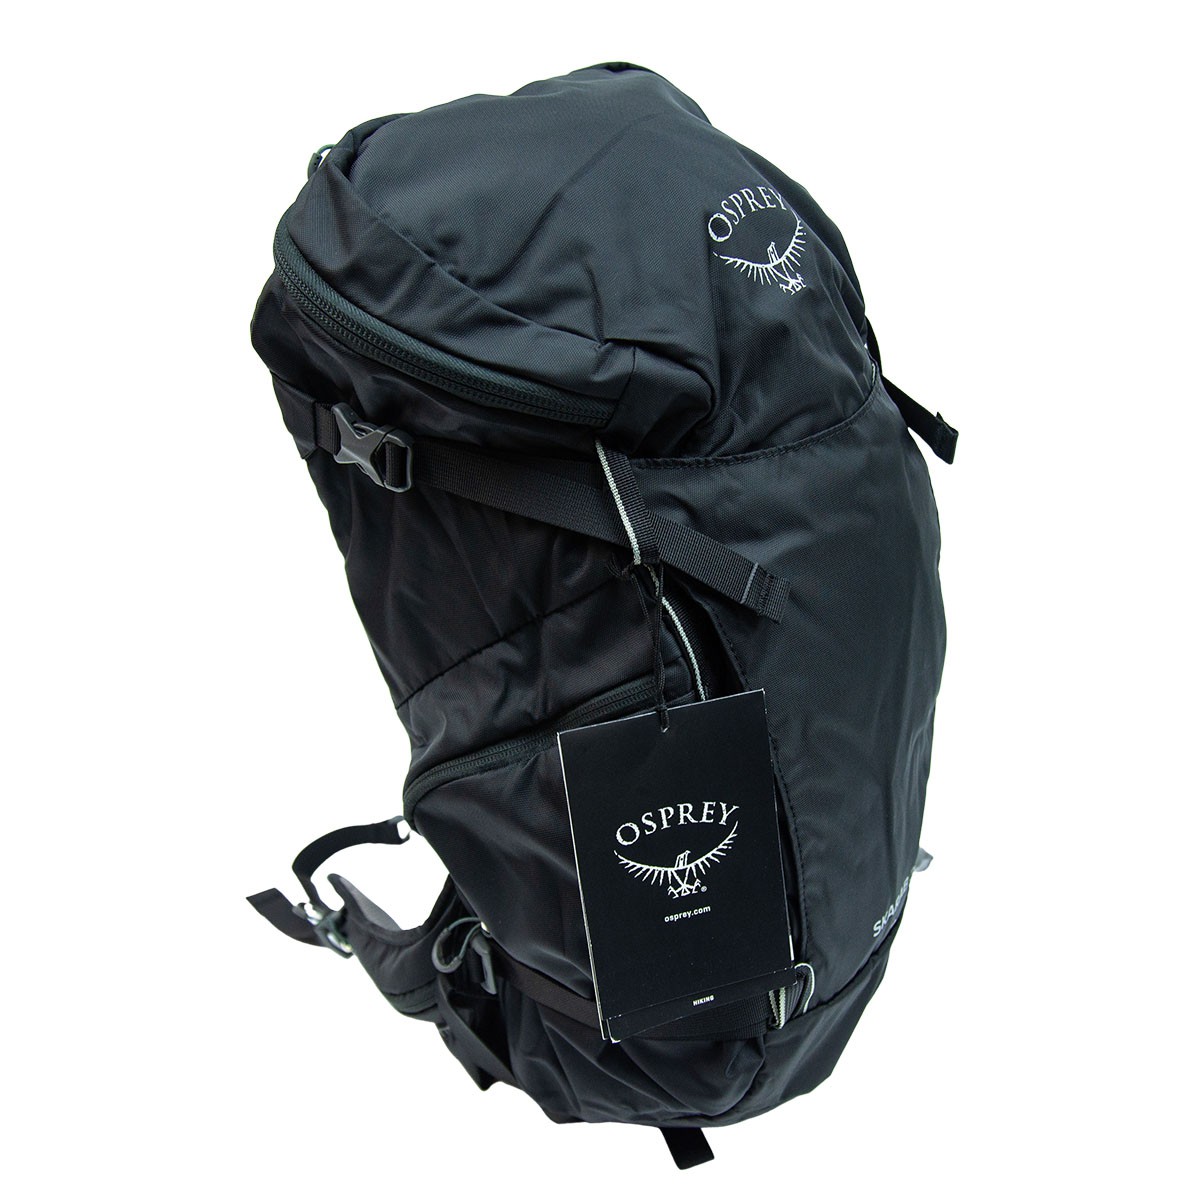 Osprey Skarab 30升 Backpack 戶外 登山 行山 背囊 背包 -連2.5L水袋 黑色